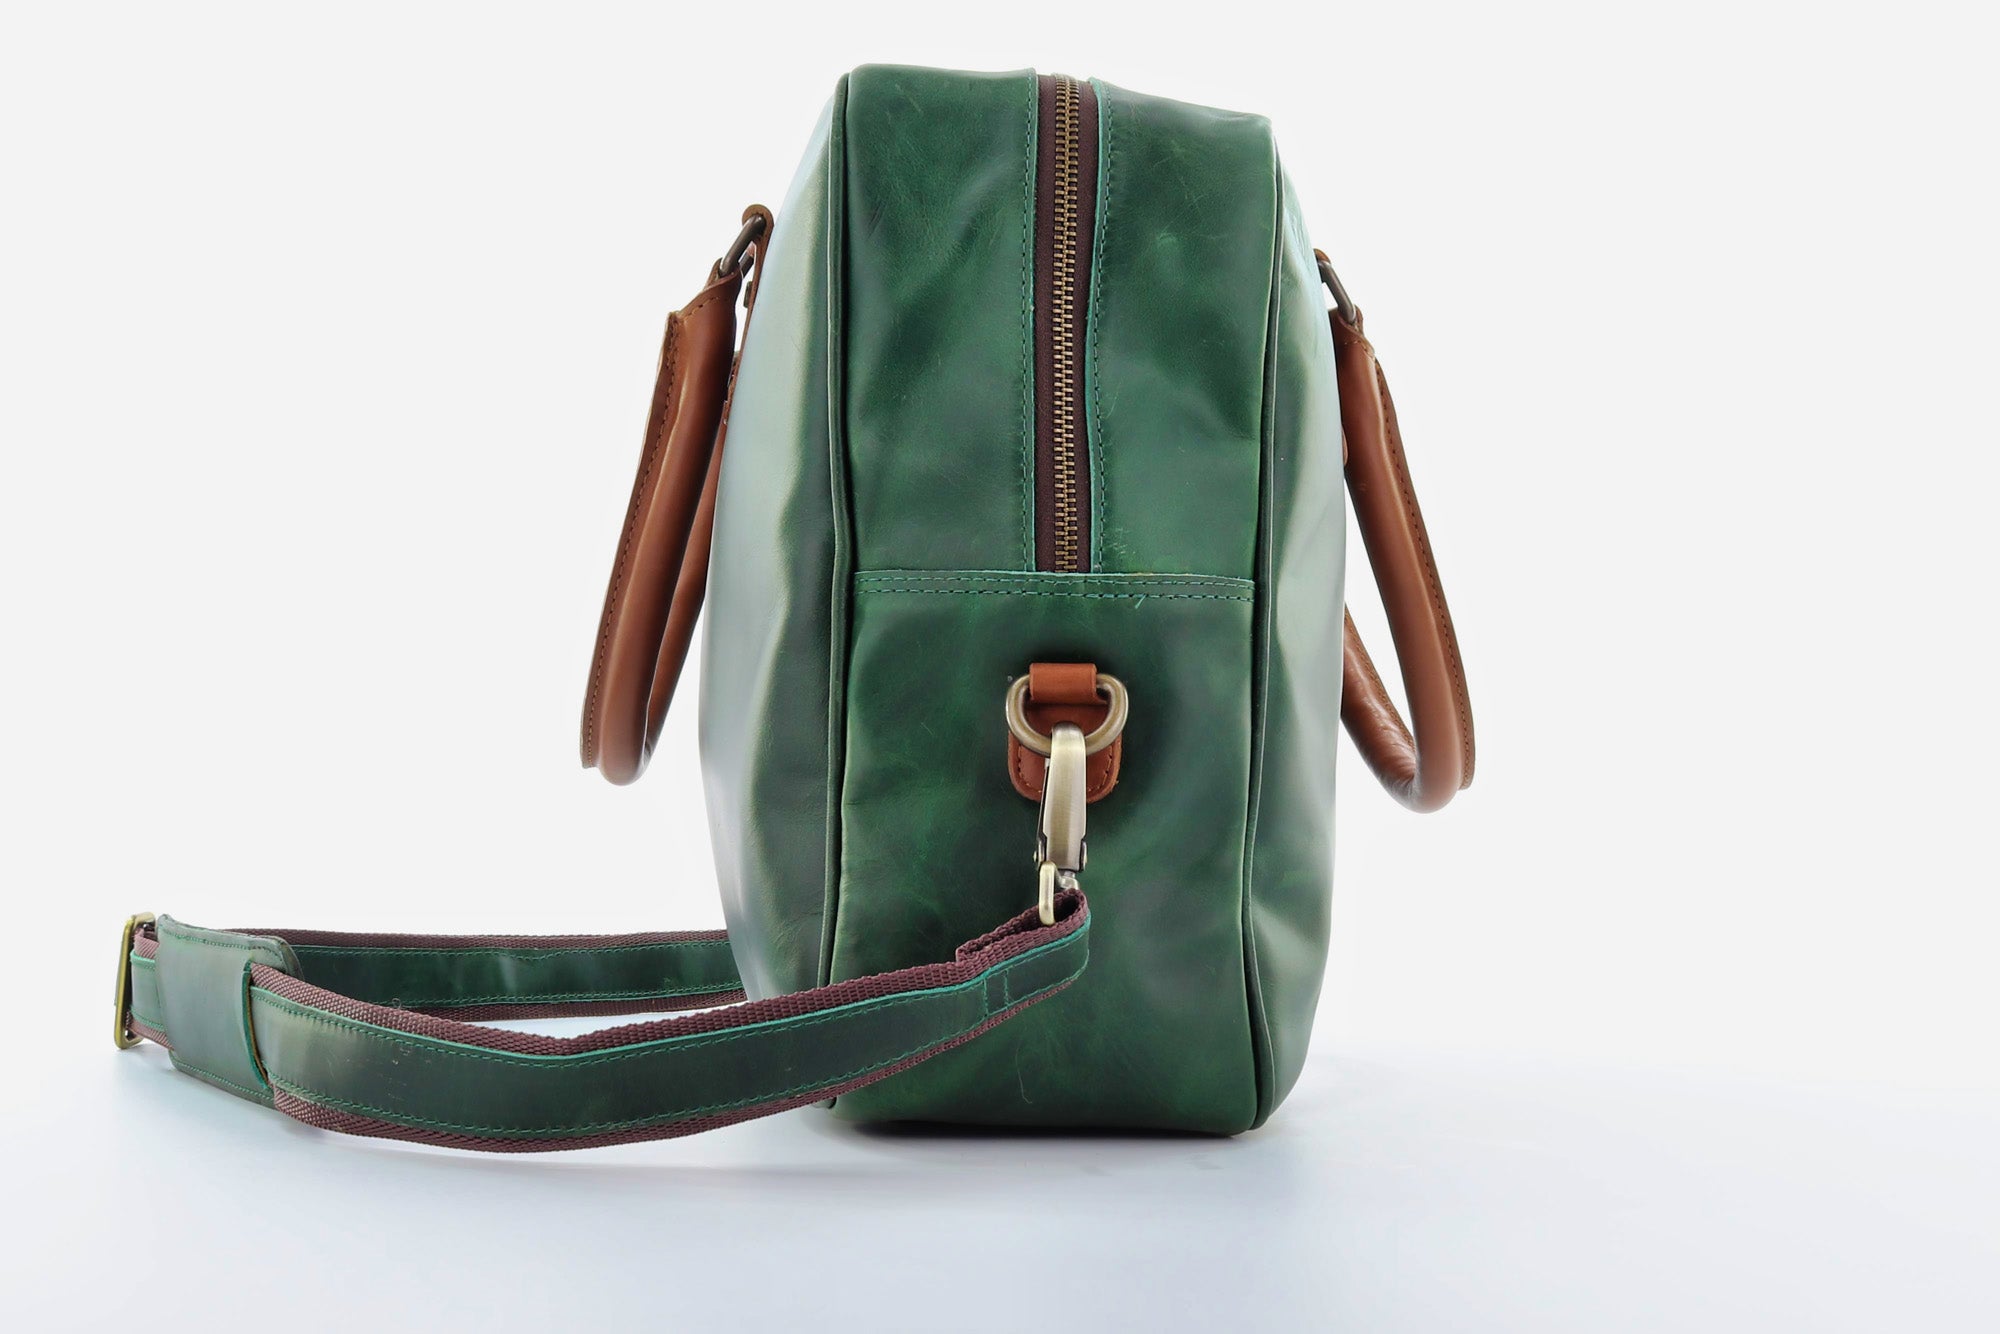 Emerald leather bag - genuine leather bag - messenger bag - emerald green - side view4